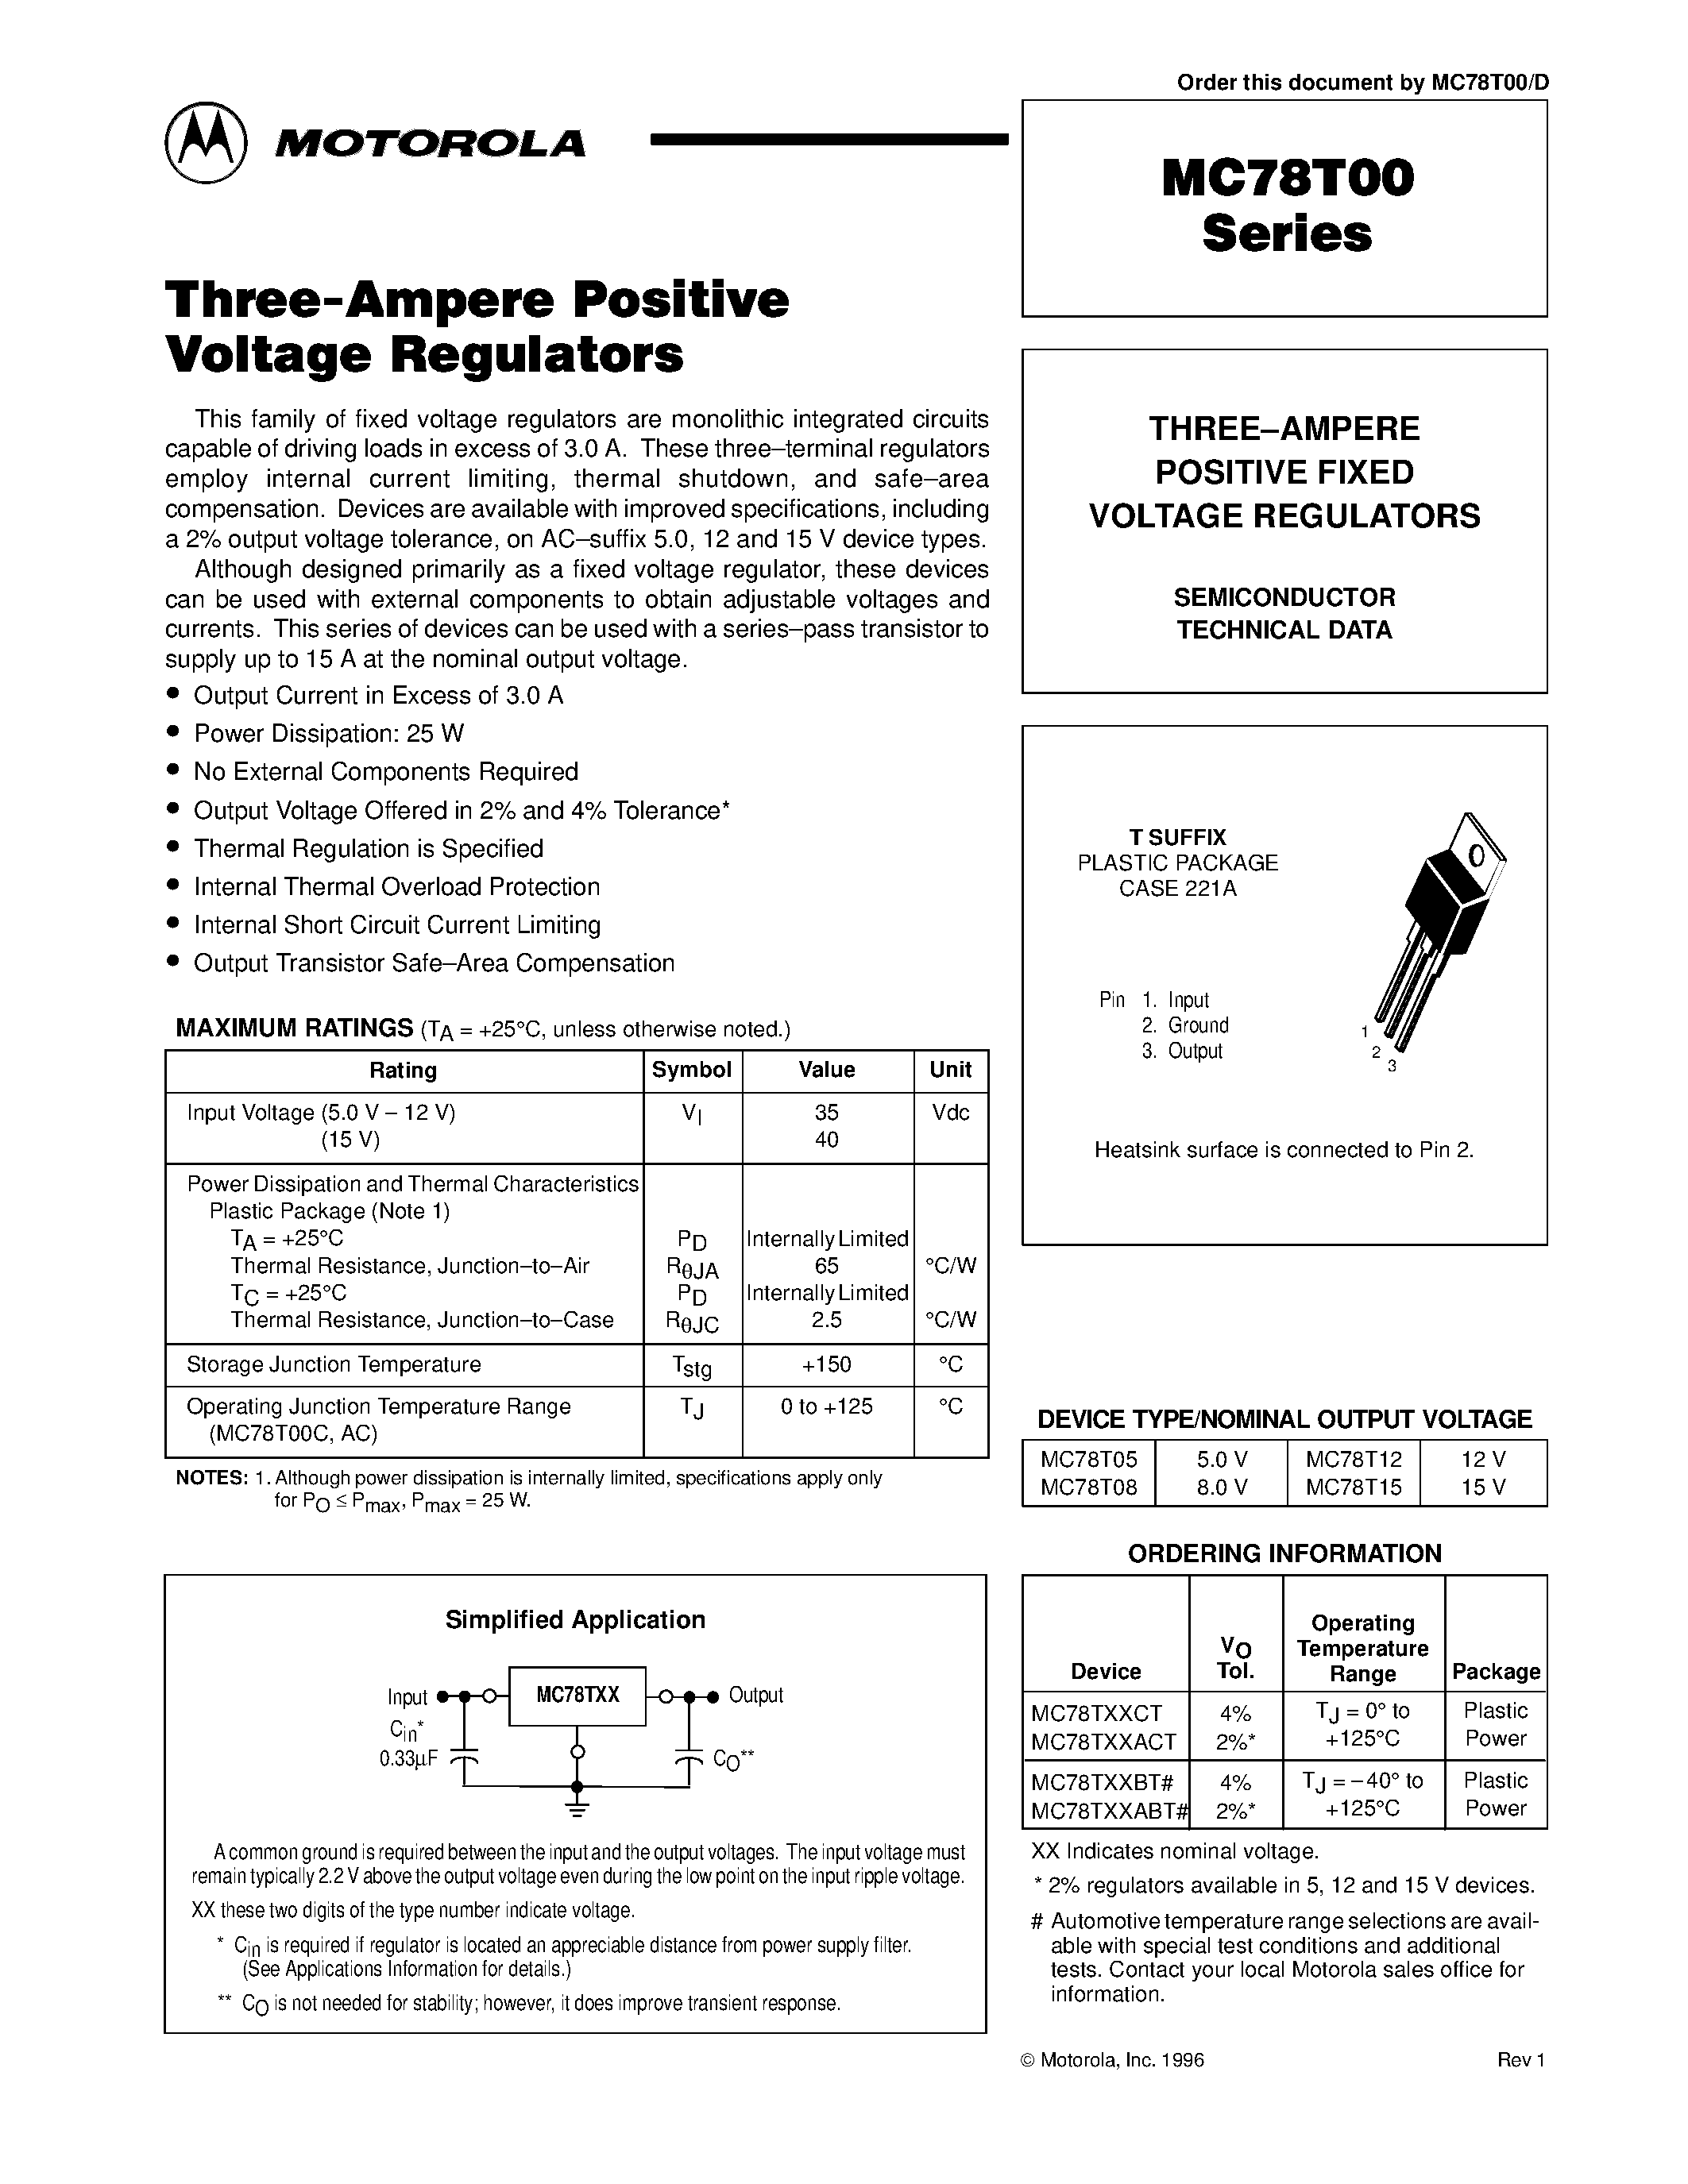 Datasheet MC78T08BT - THREE-AMPERE POSITIVE FIXED VOLTAGE REGULATORS page 1